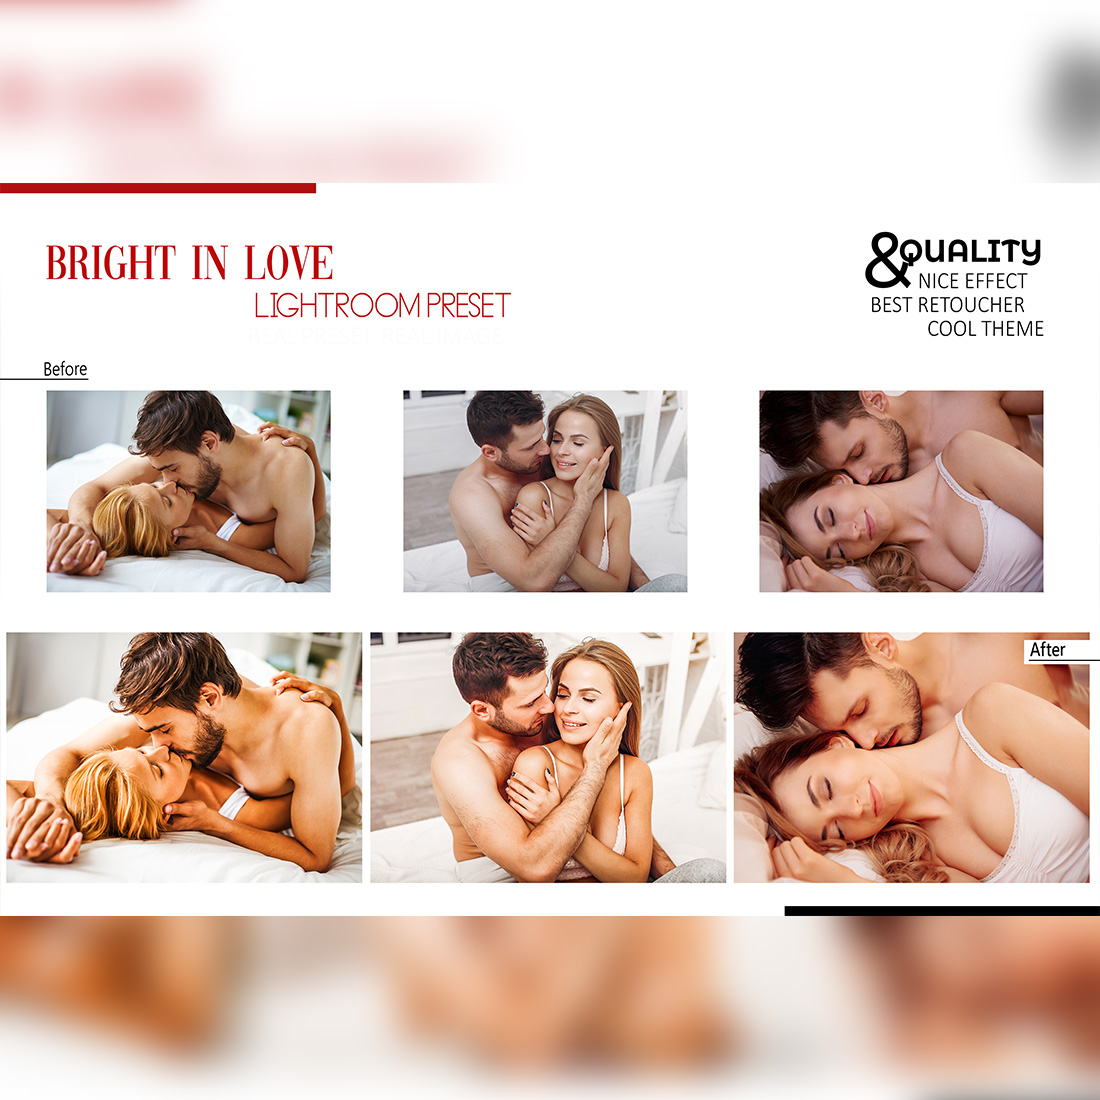 12 Cuddling Love Lightroom Presets, Romance Mobile Preset, Valentine Sexy Desktop, Lifestyle Portrait Theme Instagram LR Filter DNG Warm preview image.